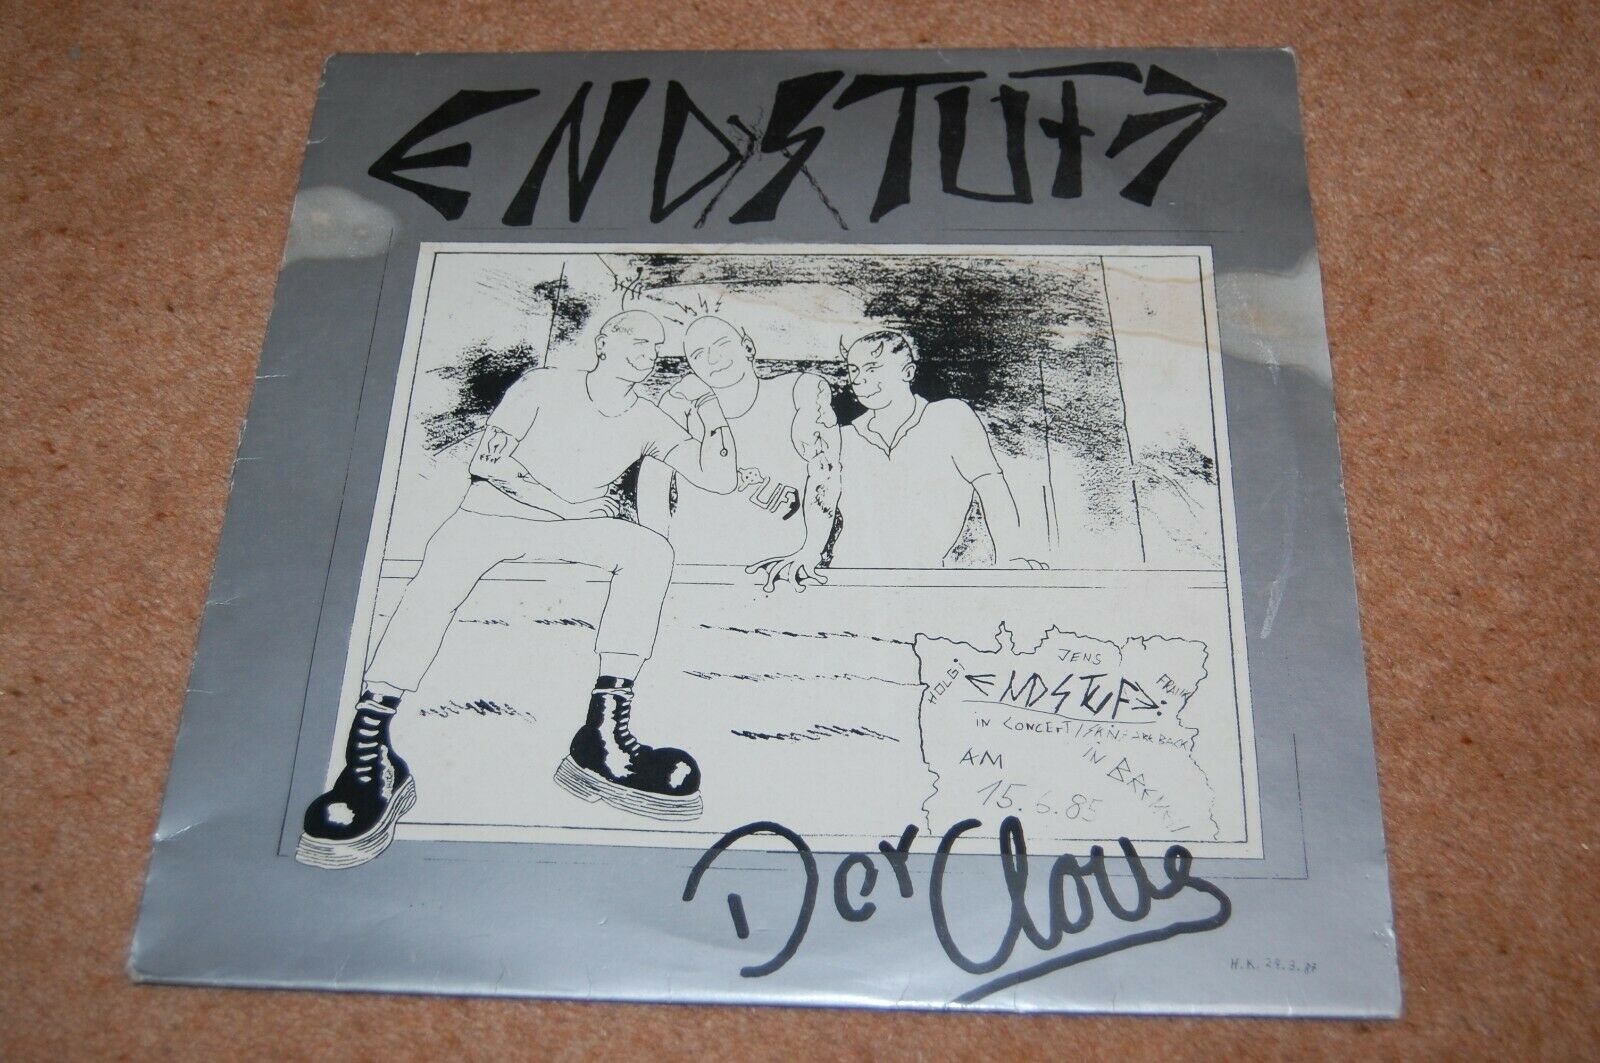  ENDSTUFE - DER CLOU (1987) - RARE GERMAN VINYL LP - ROCK-O-RAMA  RECORDS RRR 64 - auction details